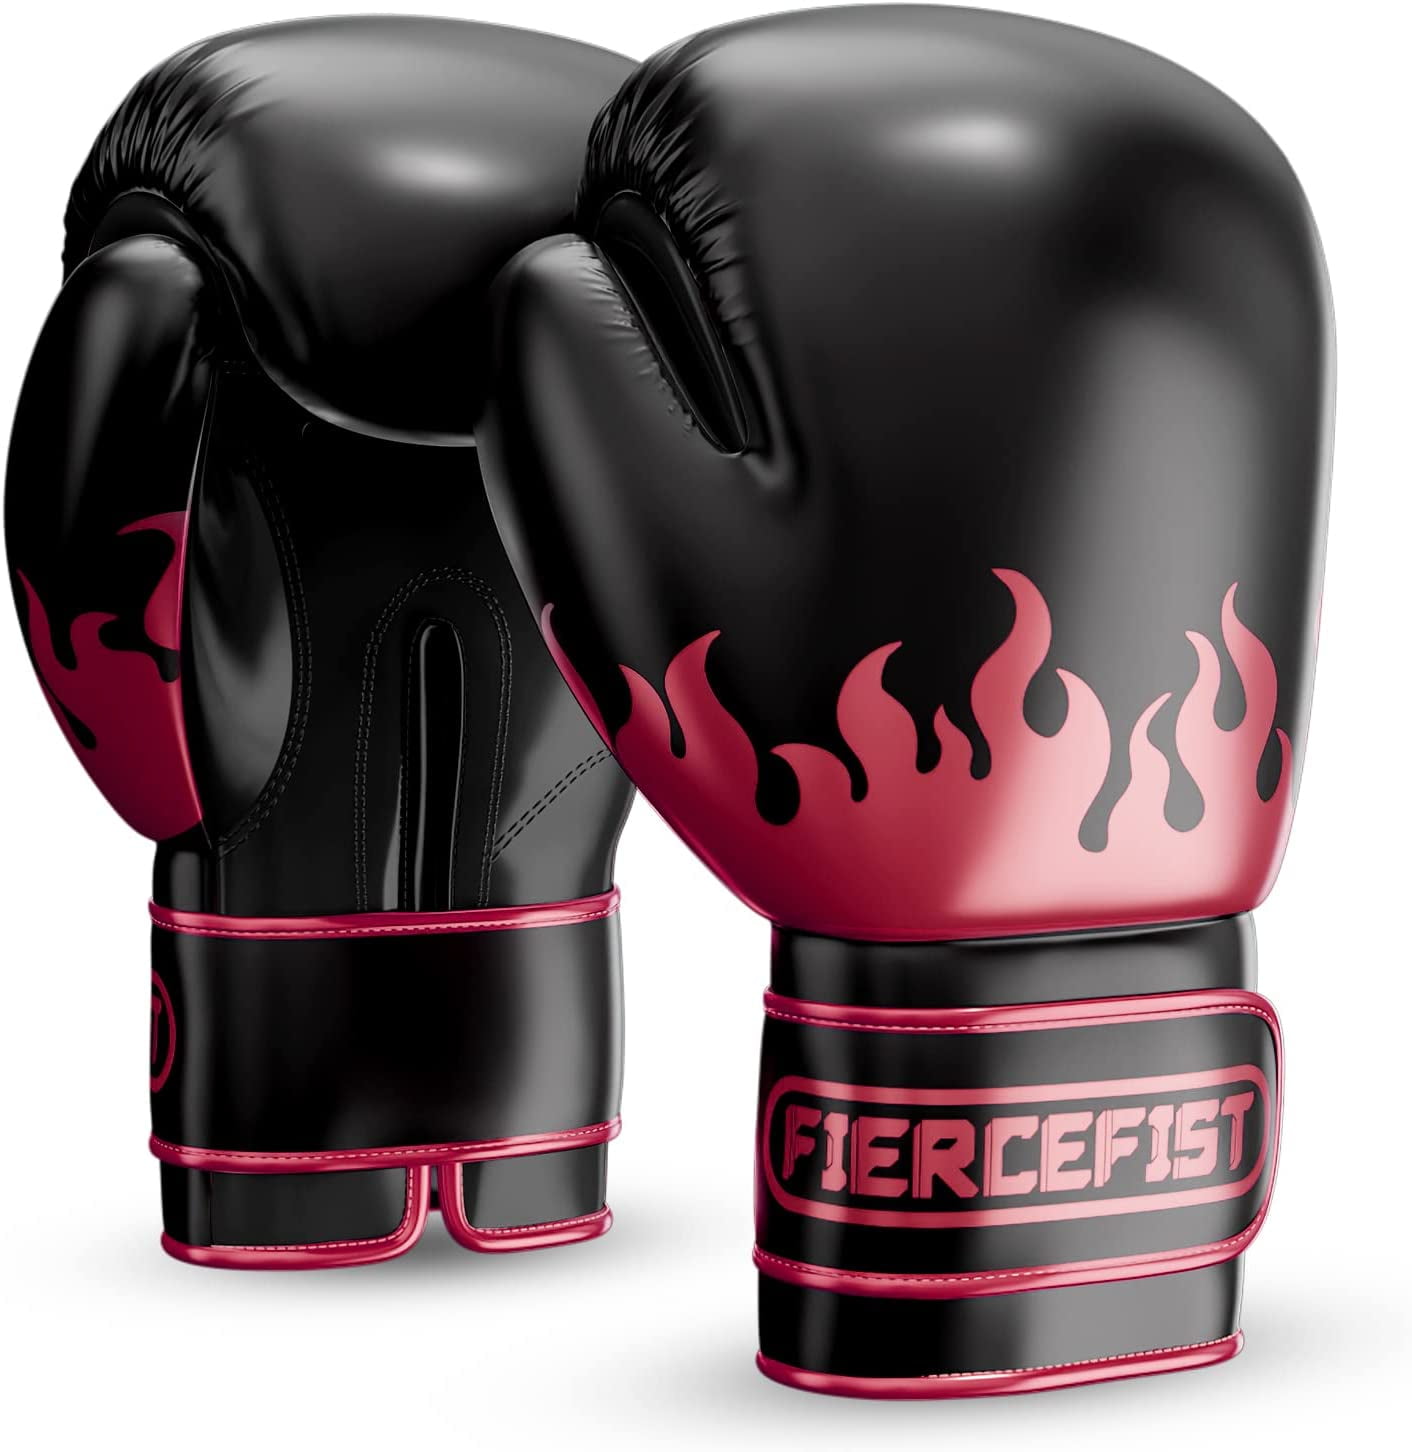 Fiercefist Boxing Gloves Men Women - Professional Training Sparring, Kickboxing, Muay Thai, MMA, Taekwondo, Fitness for Punching Focus Mitts Pad